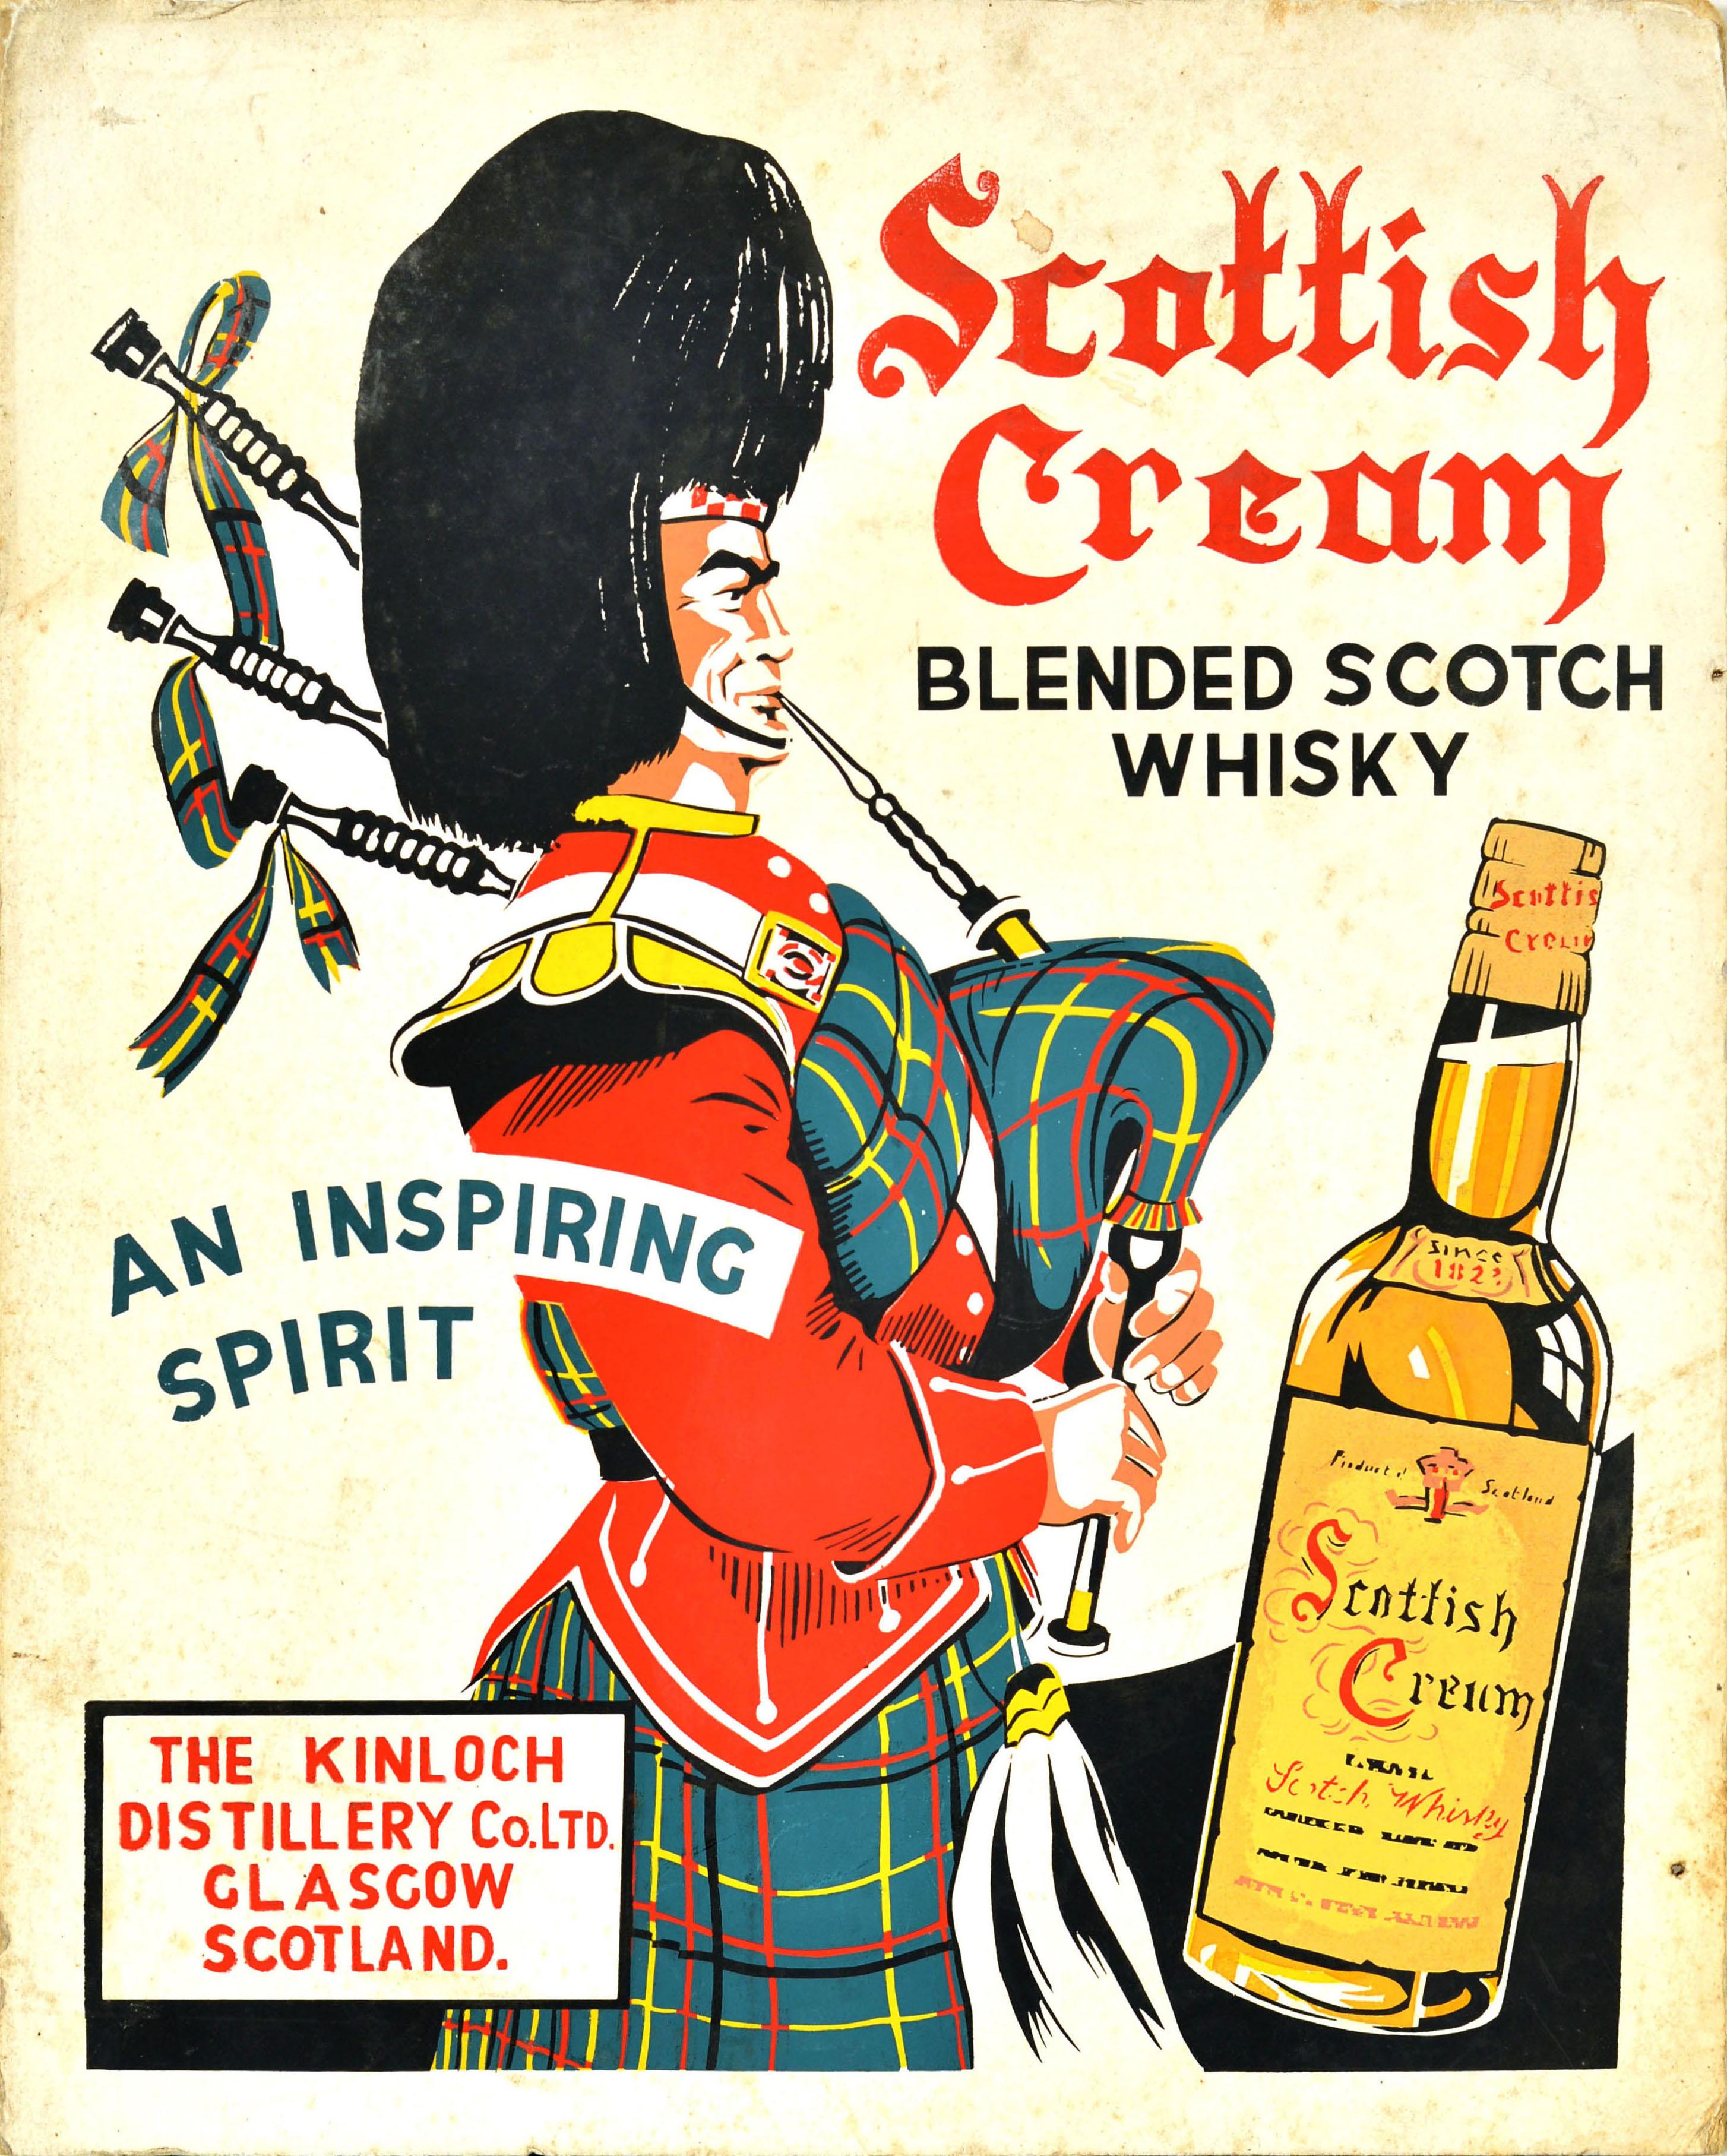 Unknown Print - Original Vintage Drink Advertising Poster Scottish Cream Blended Scotch Whisky